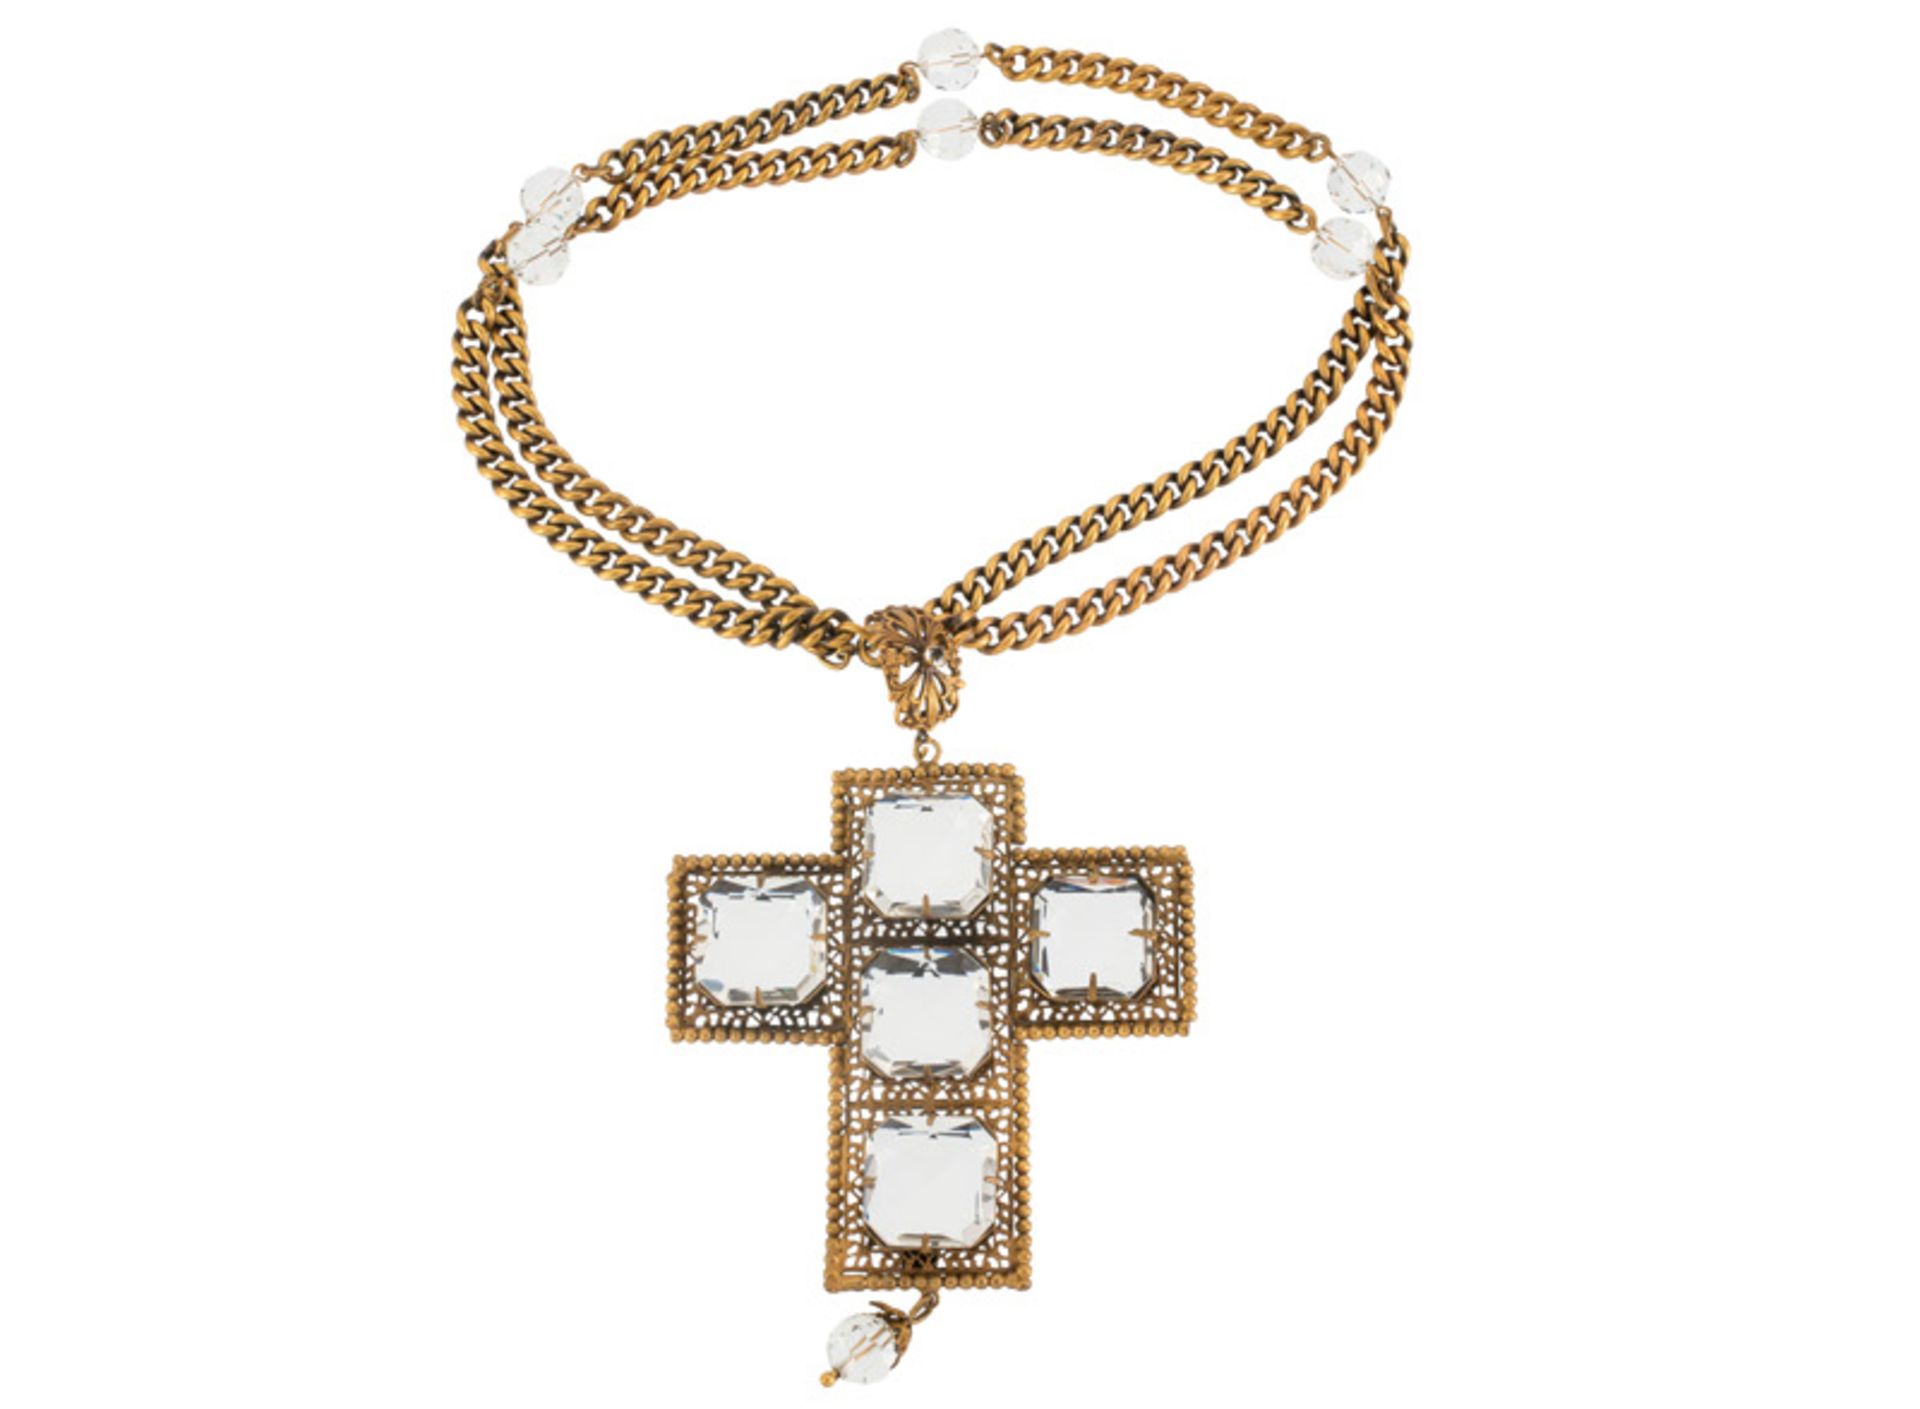 A Joseff Hollywood goldtone and rhinetone neckalce with cross pendant set with lightblue stones